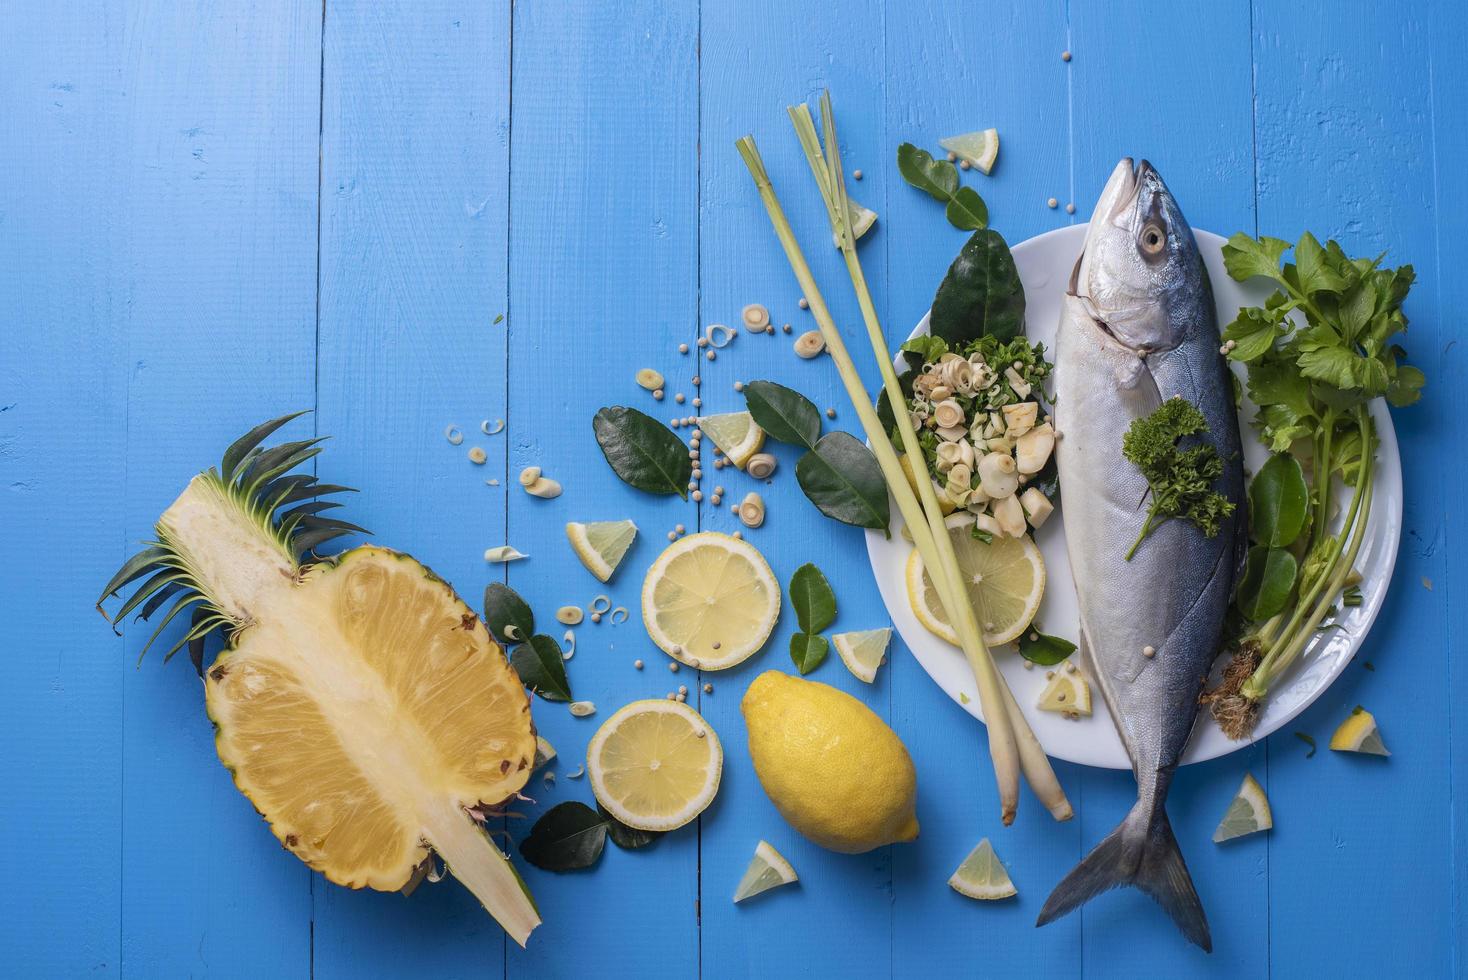 fiskmat med ingredienskryddor på blått bord foto